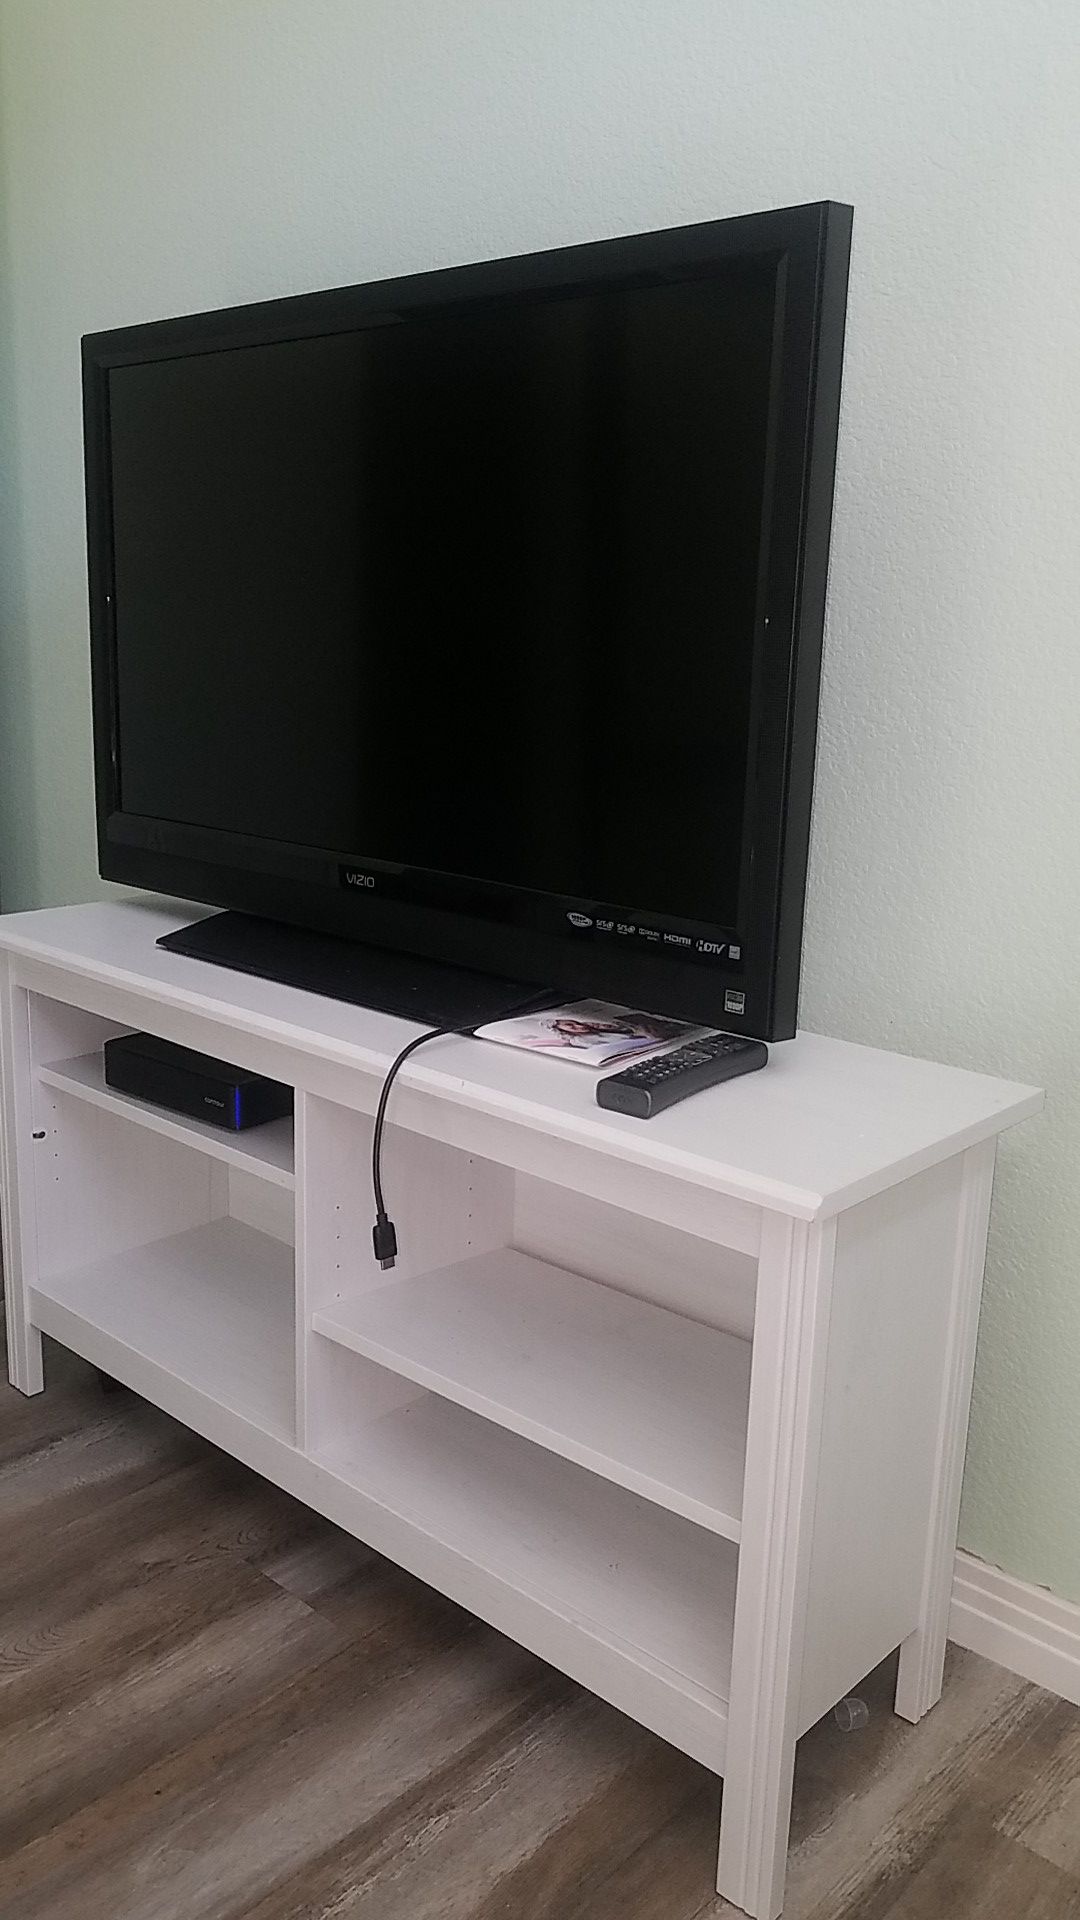 Ikea Brusali white TV stand with Vizio 42'' HD lcd television